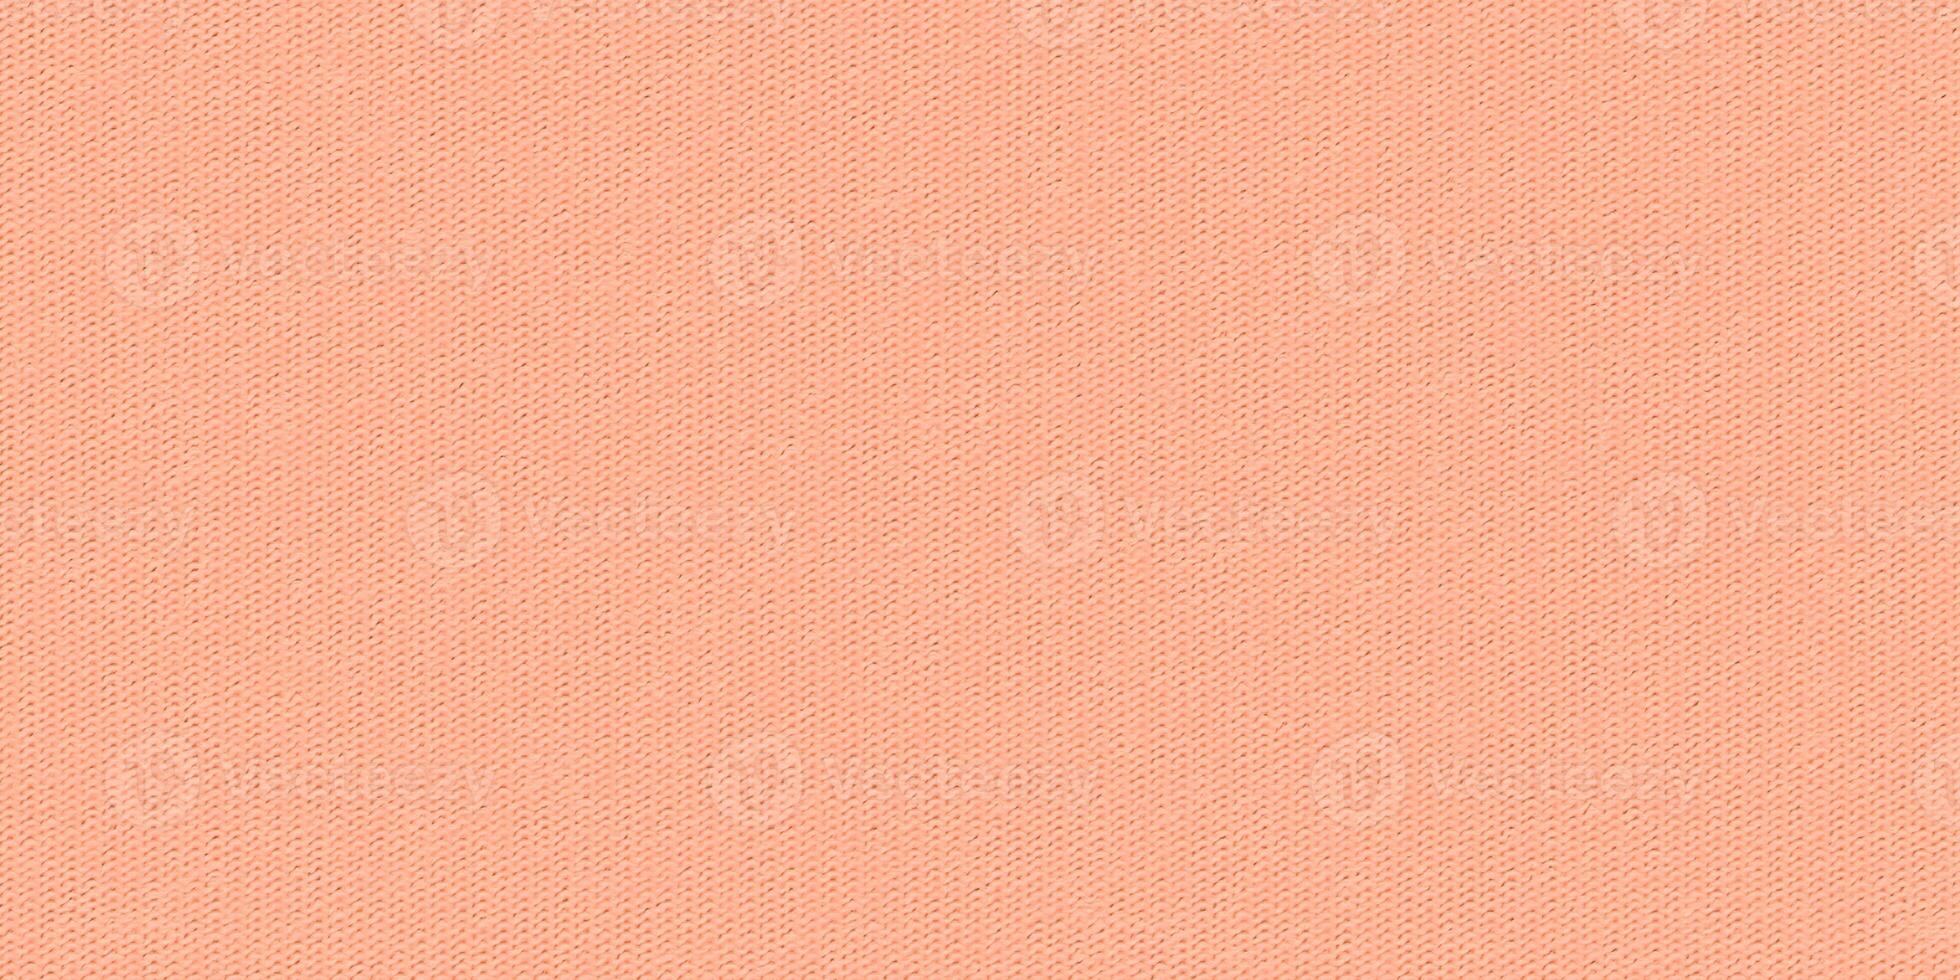 jersey stitch fabric texture background photo